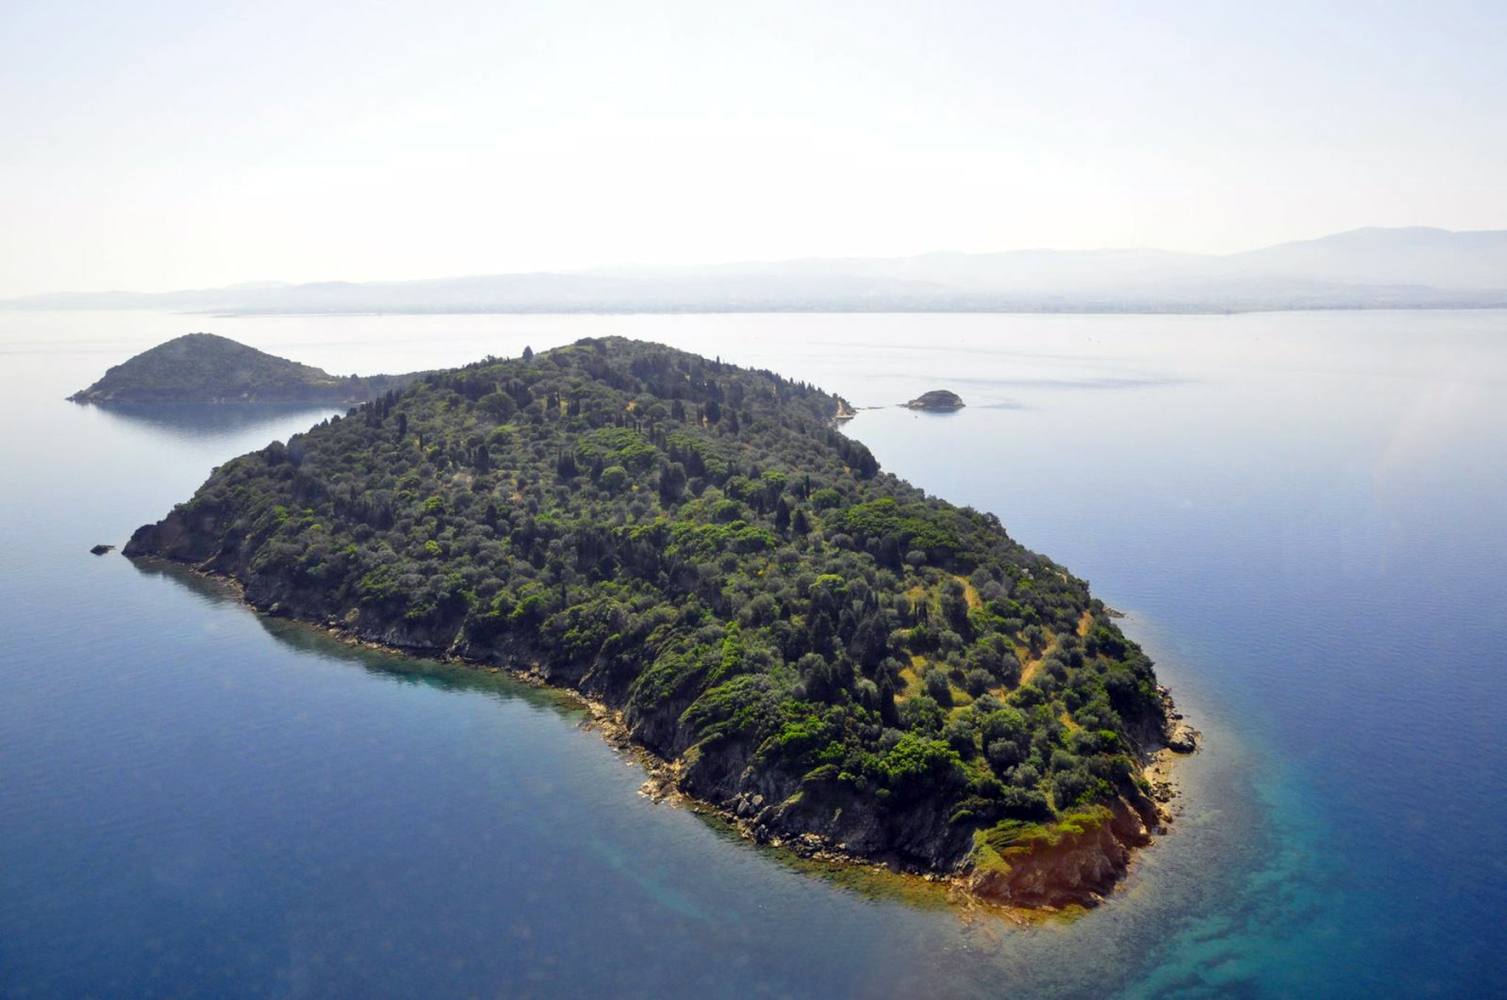 Private Islands for rent - Greek Beach Estate - Greece - Europe